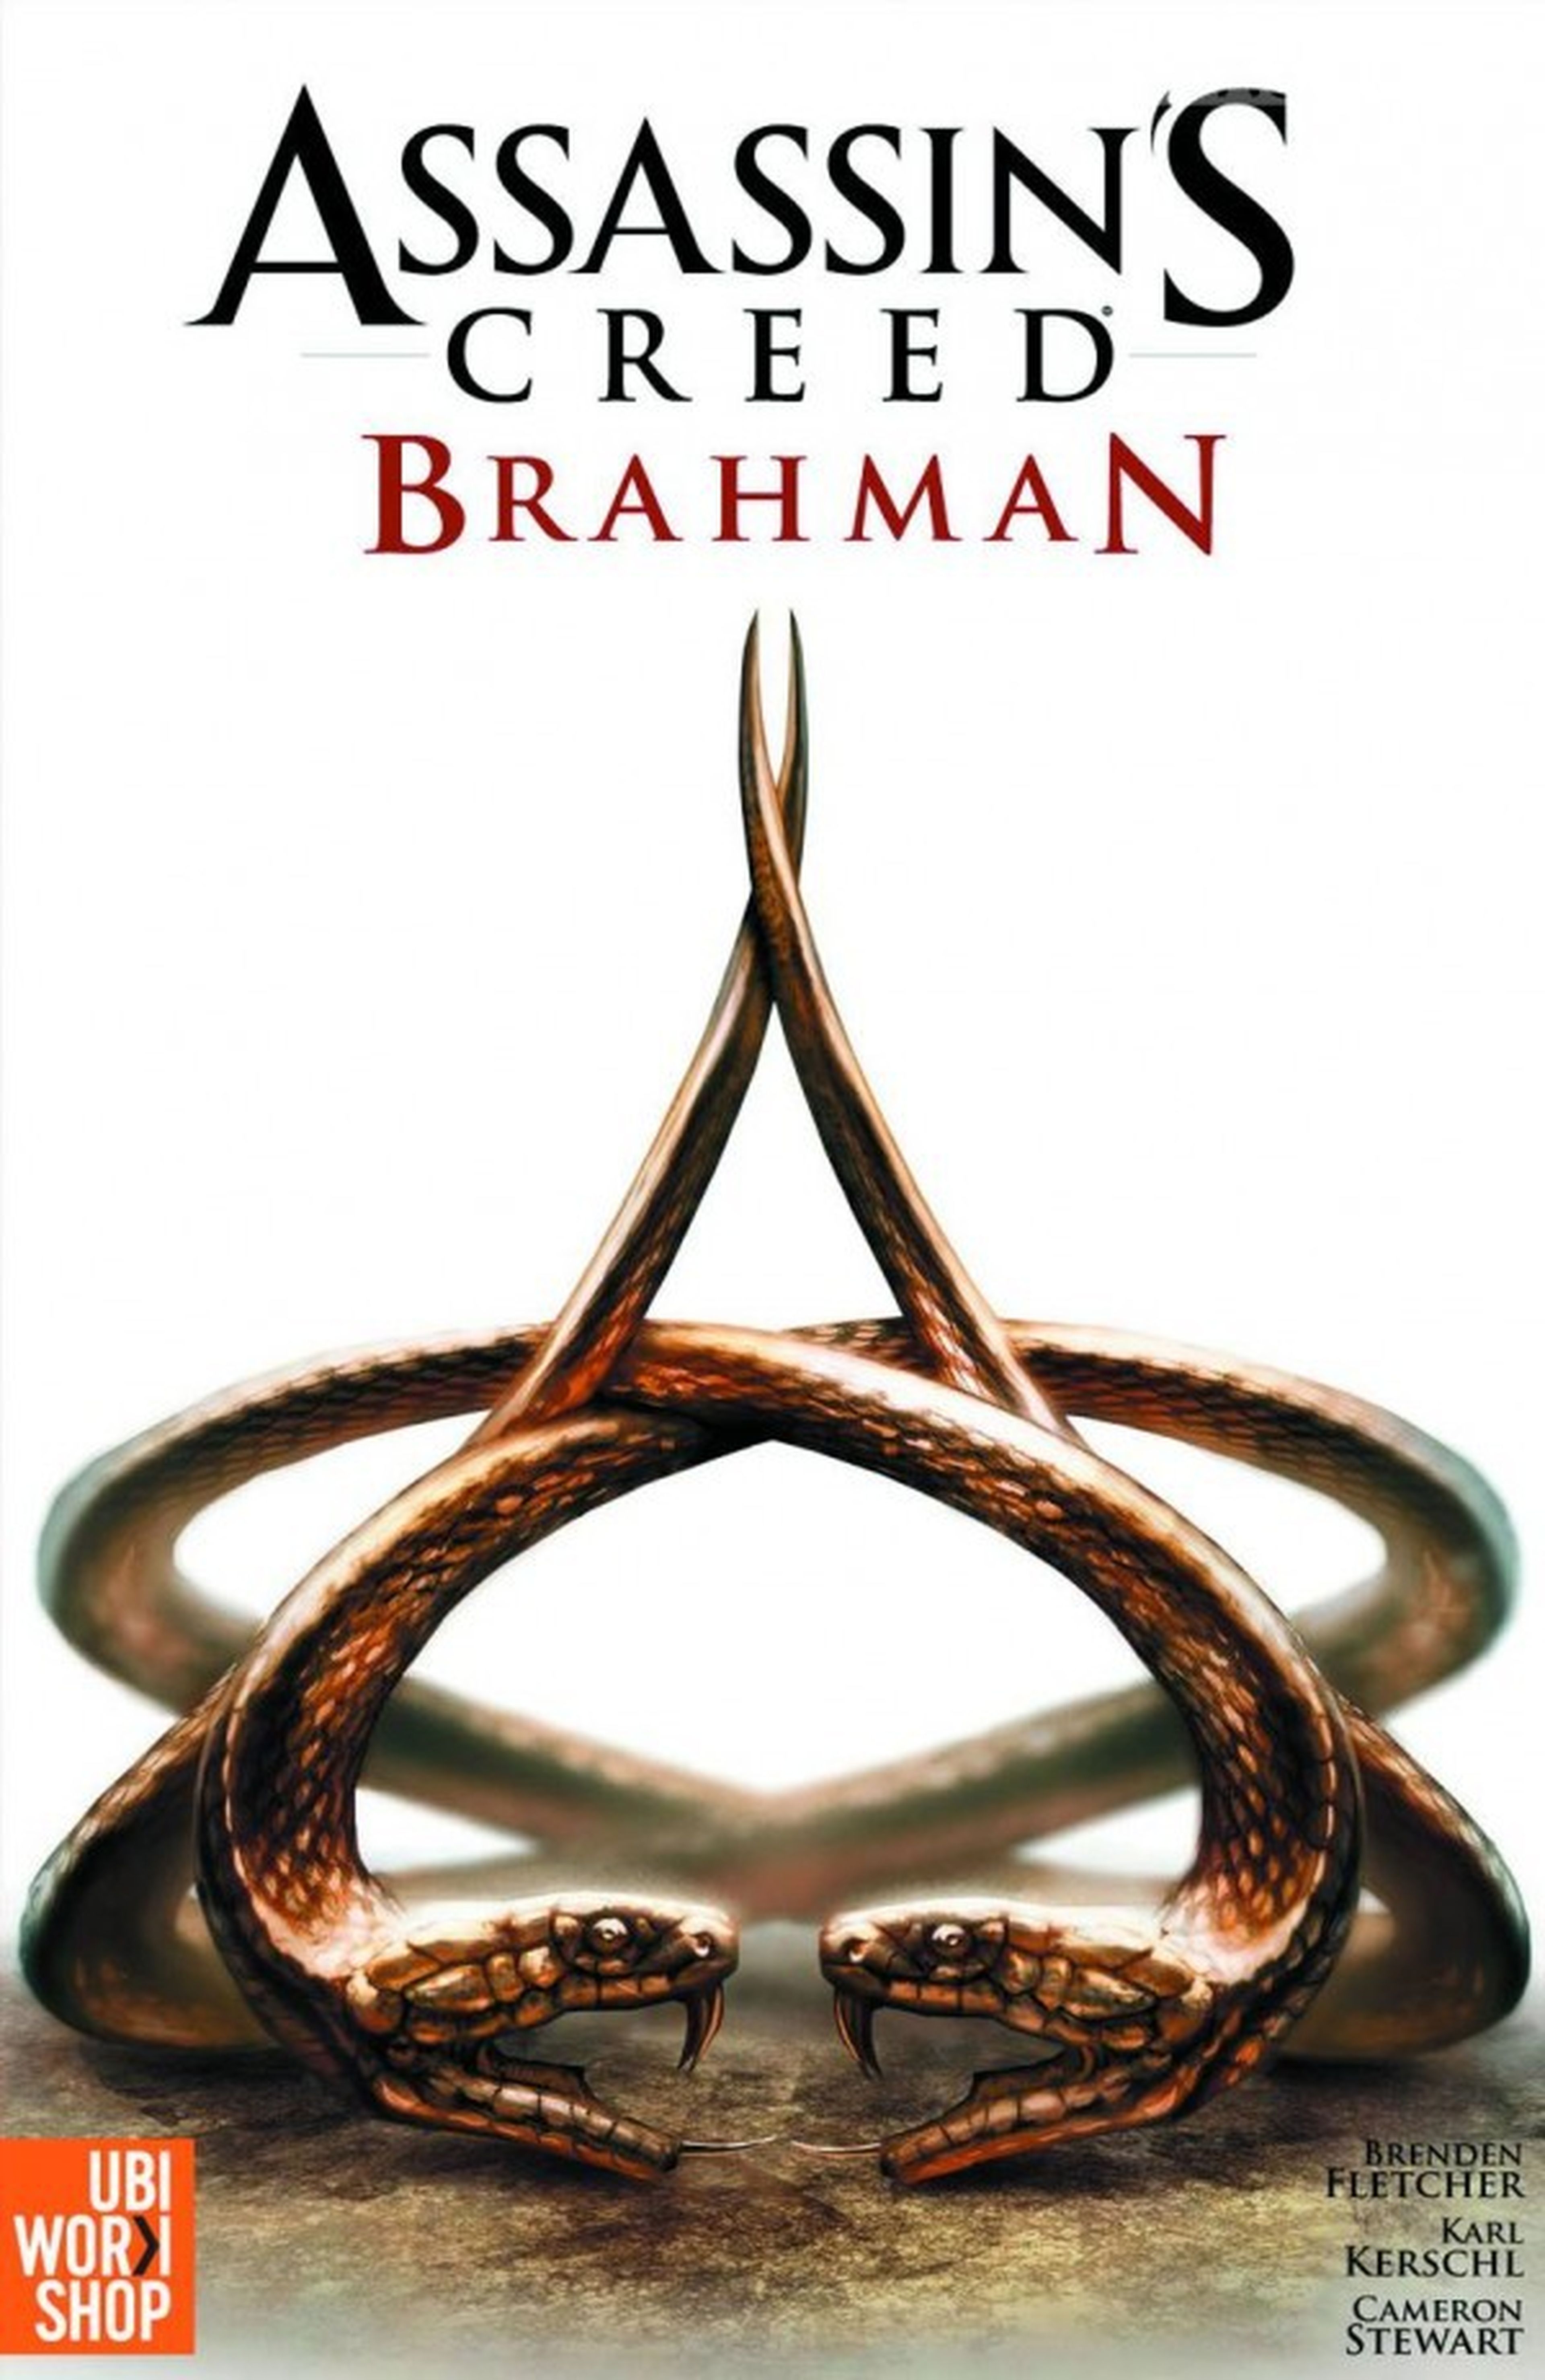 Assassin's Creed: Brahman saldrá en febrero